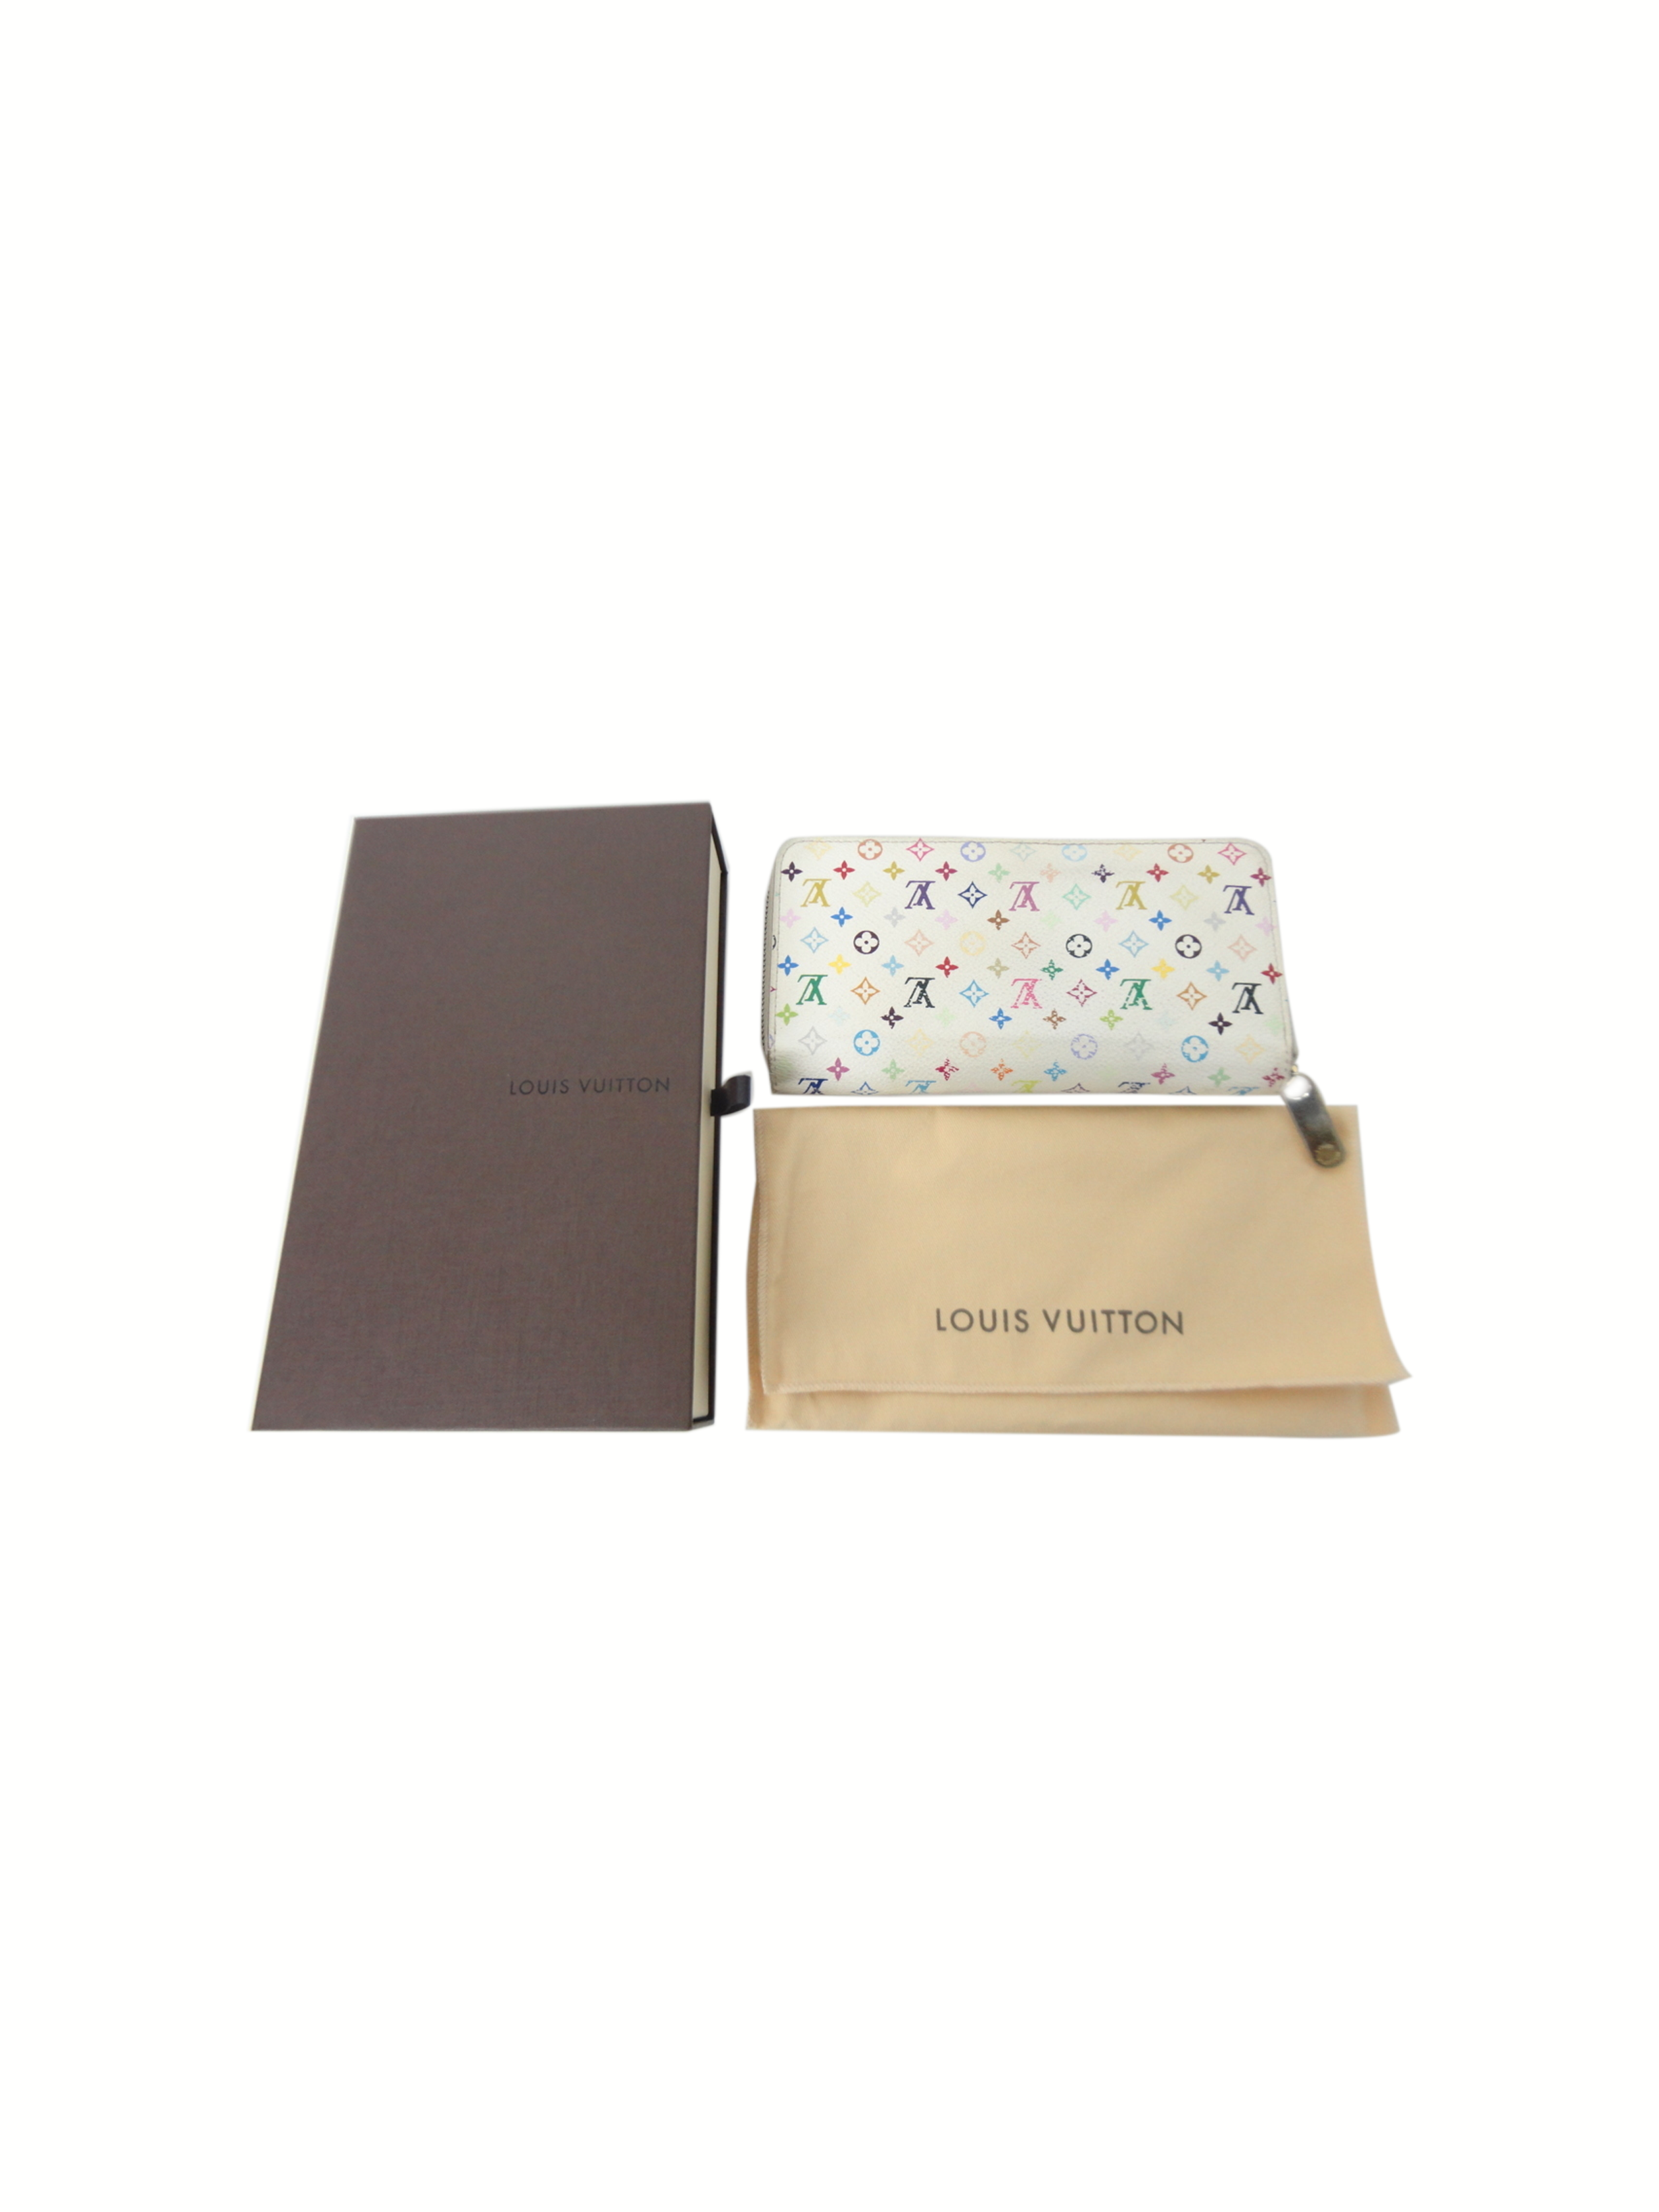 S/S 2003 Louis Vuitton x Murakami Monogram Zip Pouch Wallet